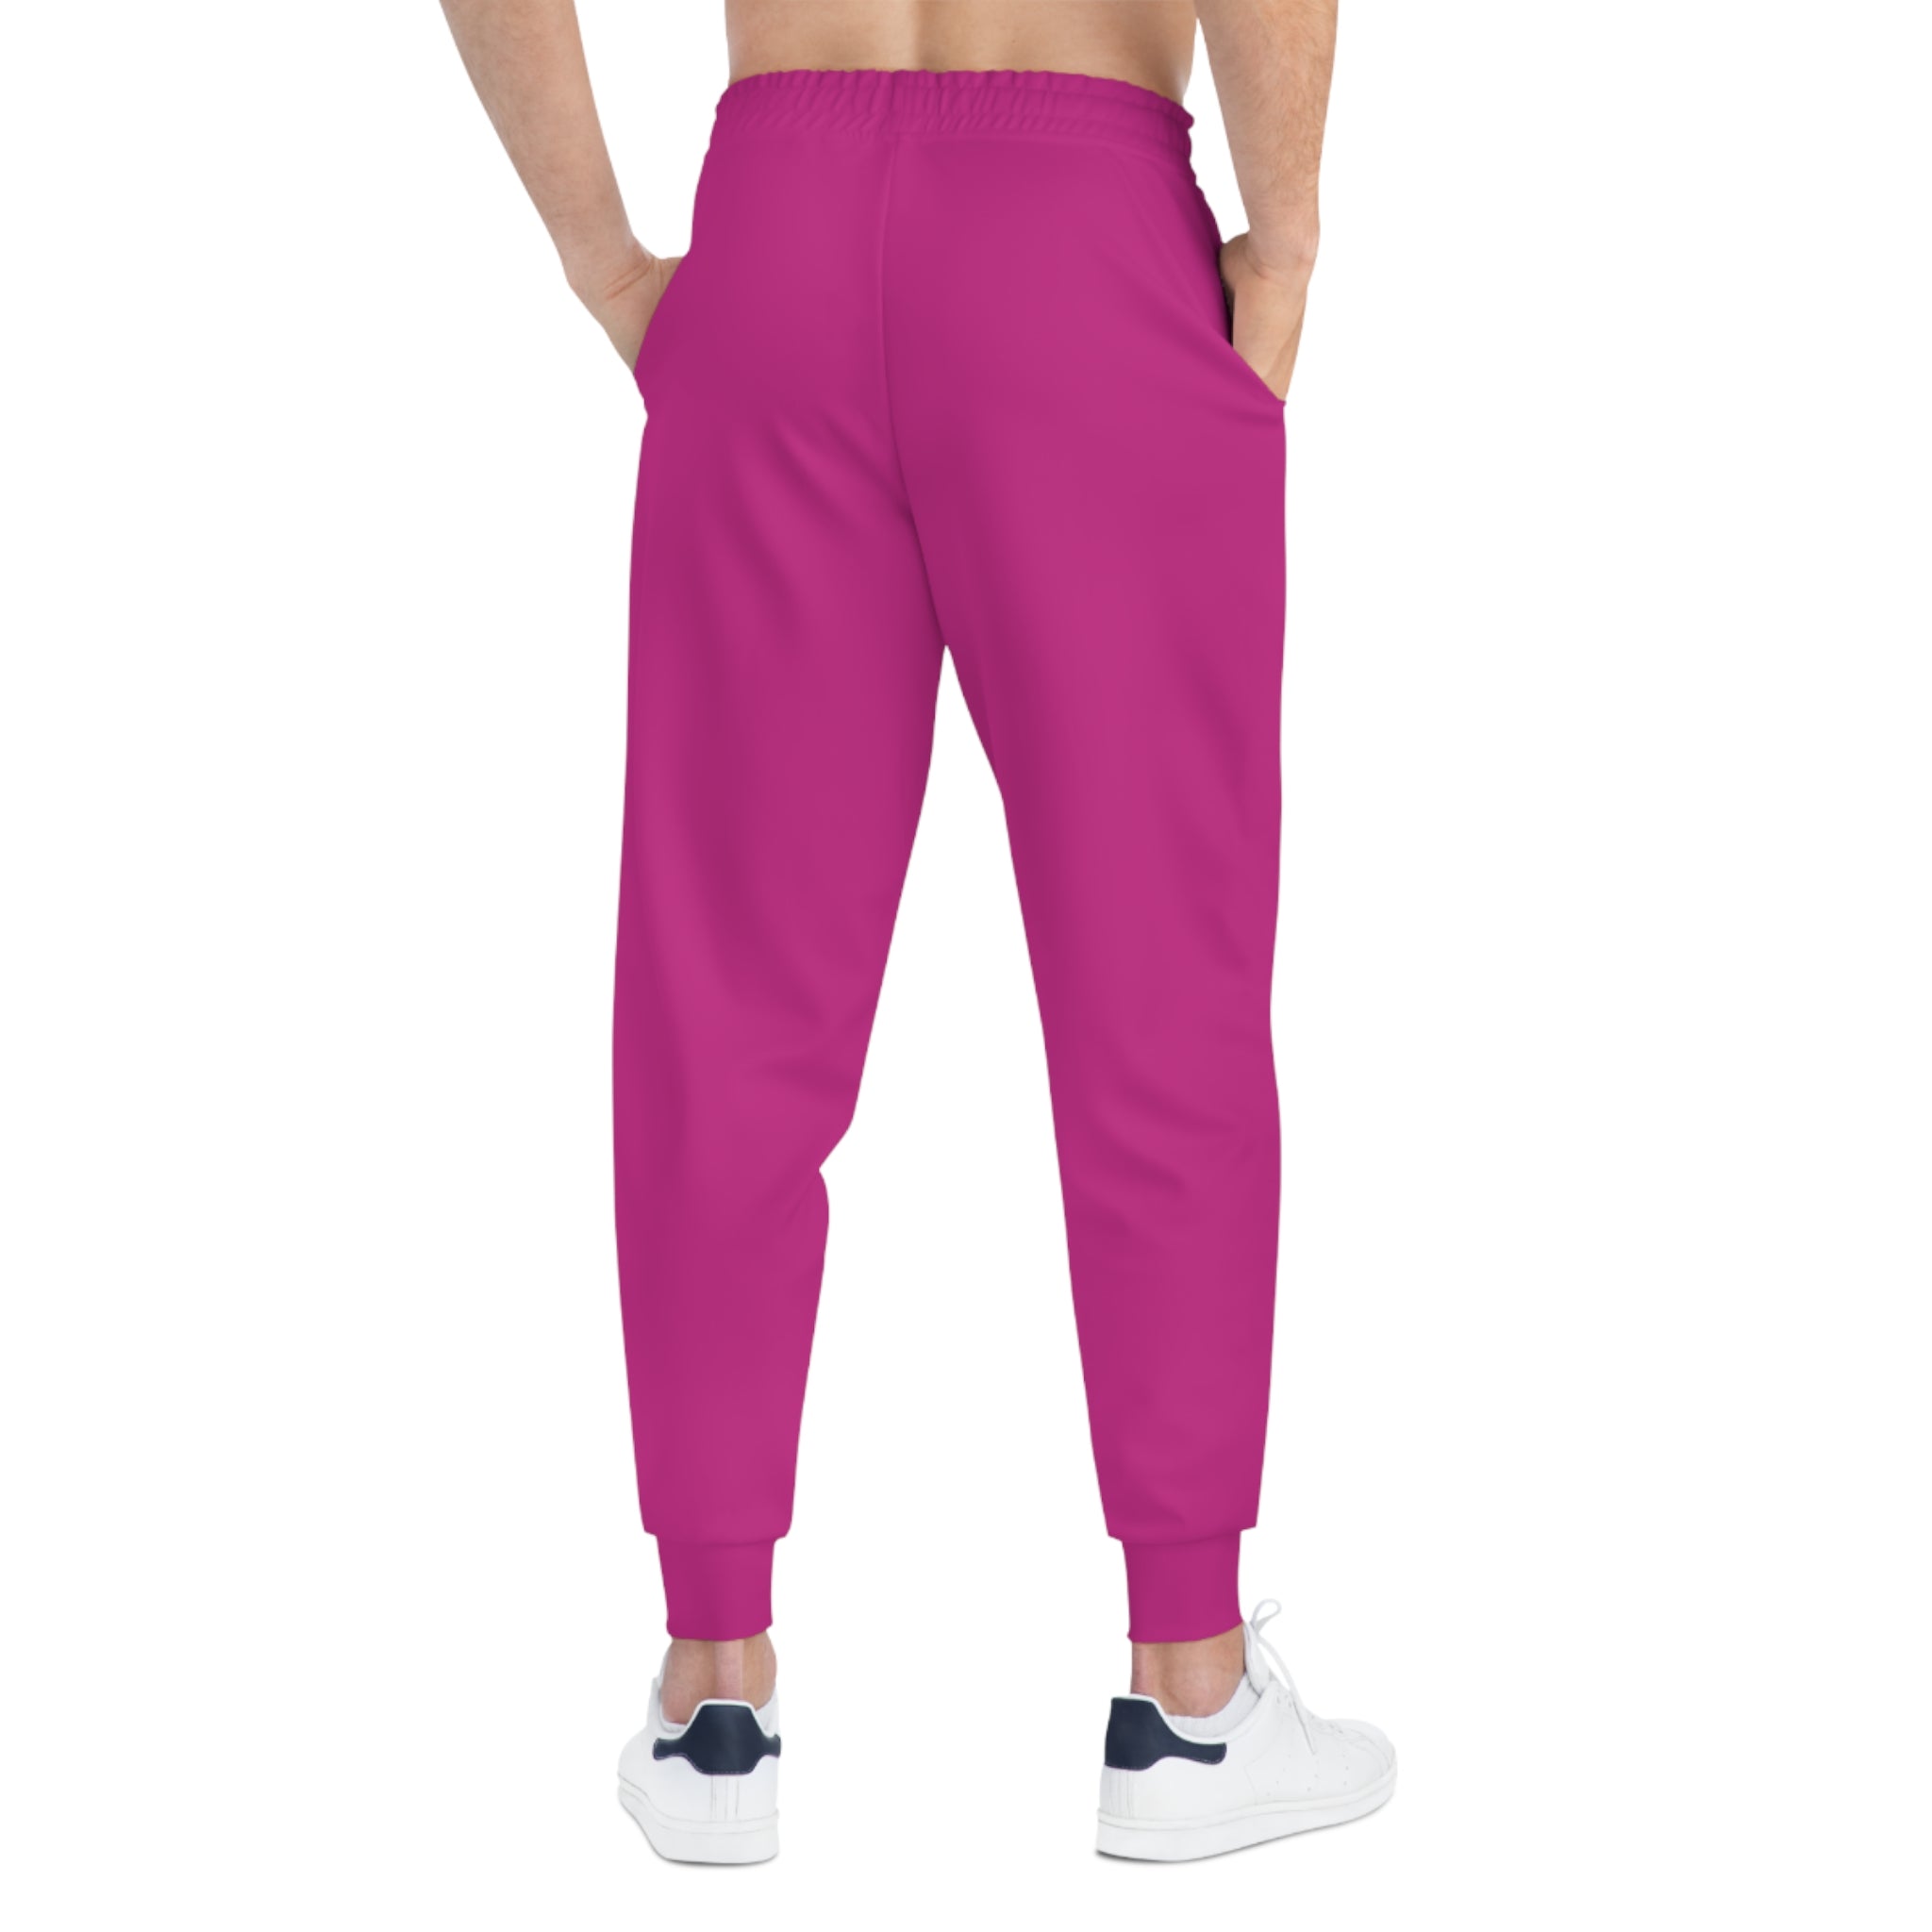 CombinedMinds Unisex Athletic Joggers Pink/White Logo